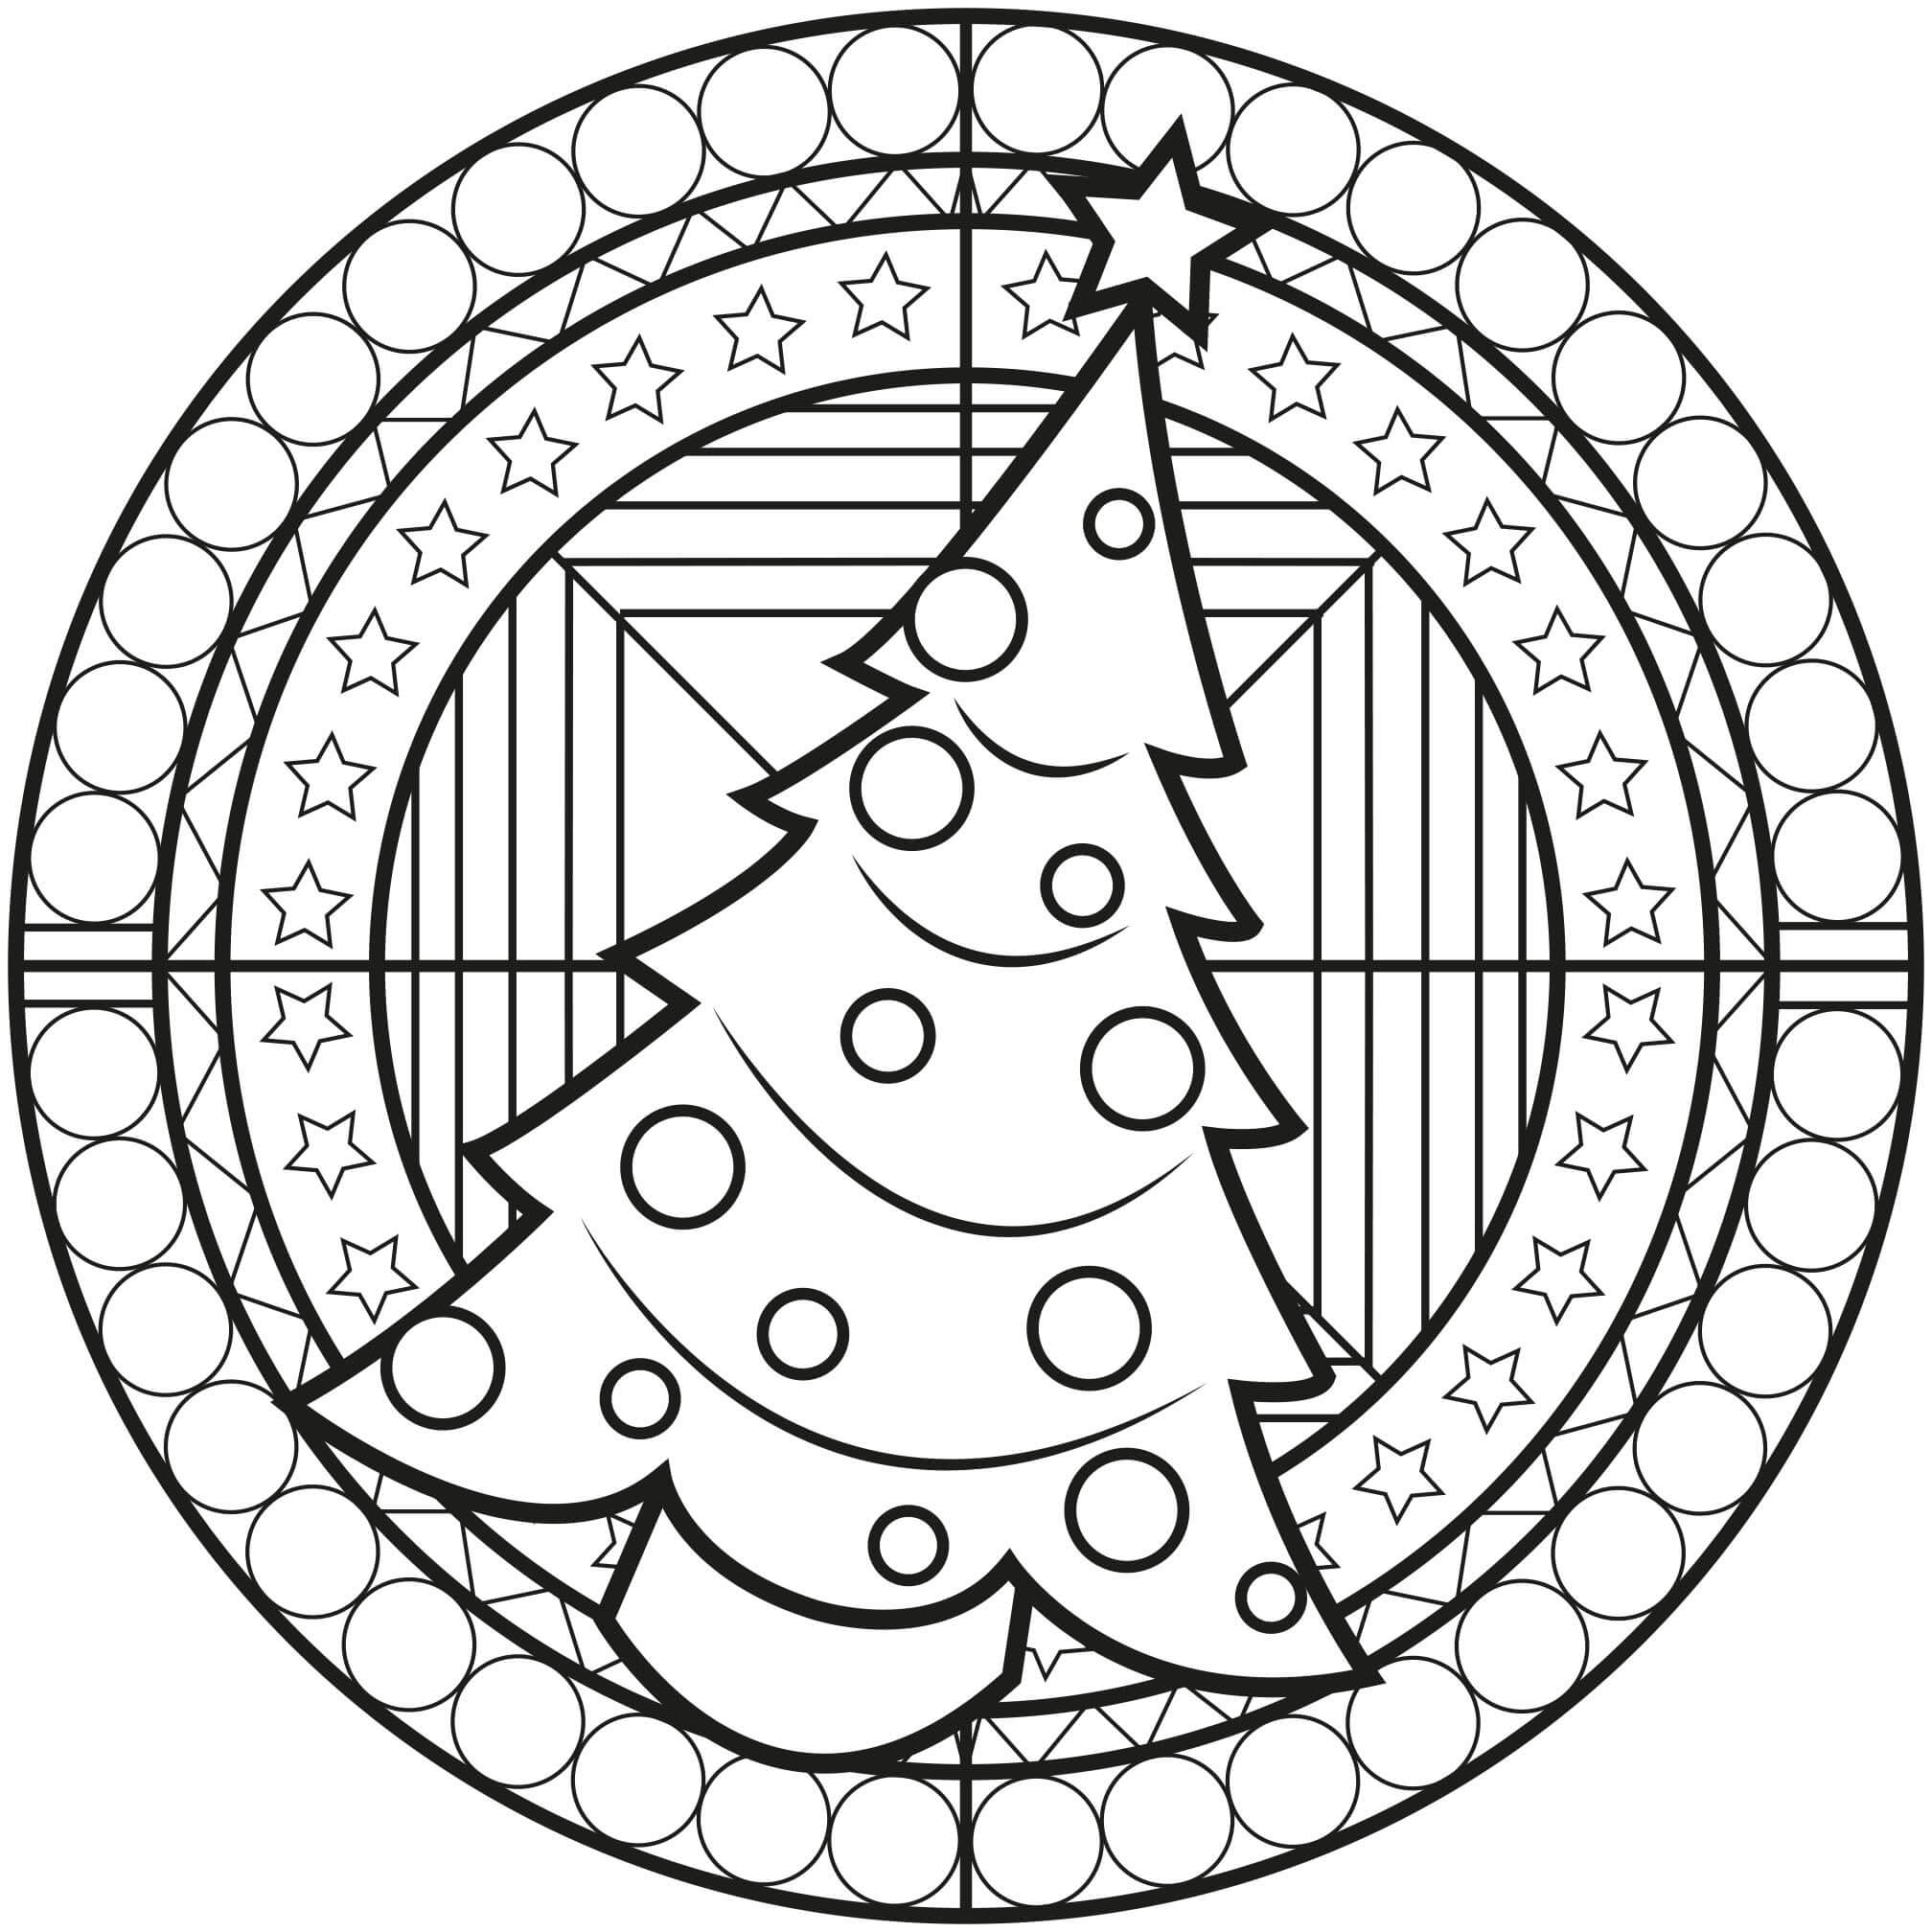 Mandala Christmas Tree Coloring Page - Sheet 2 Mandalas